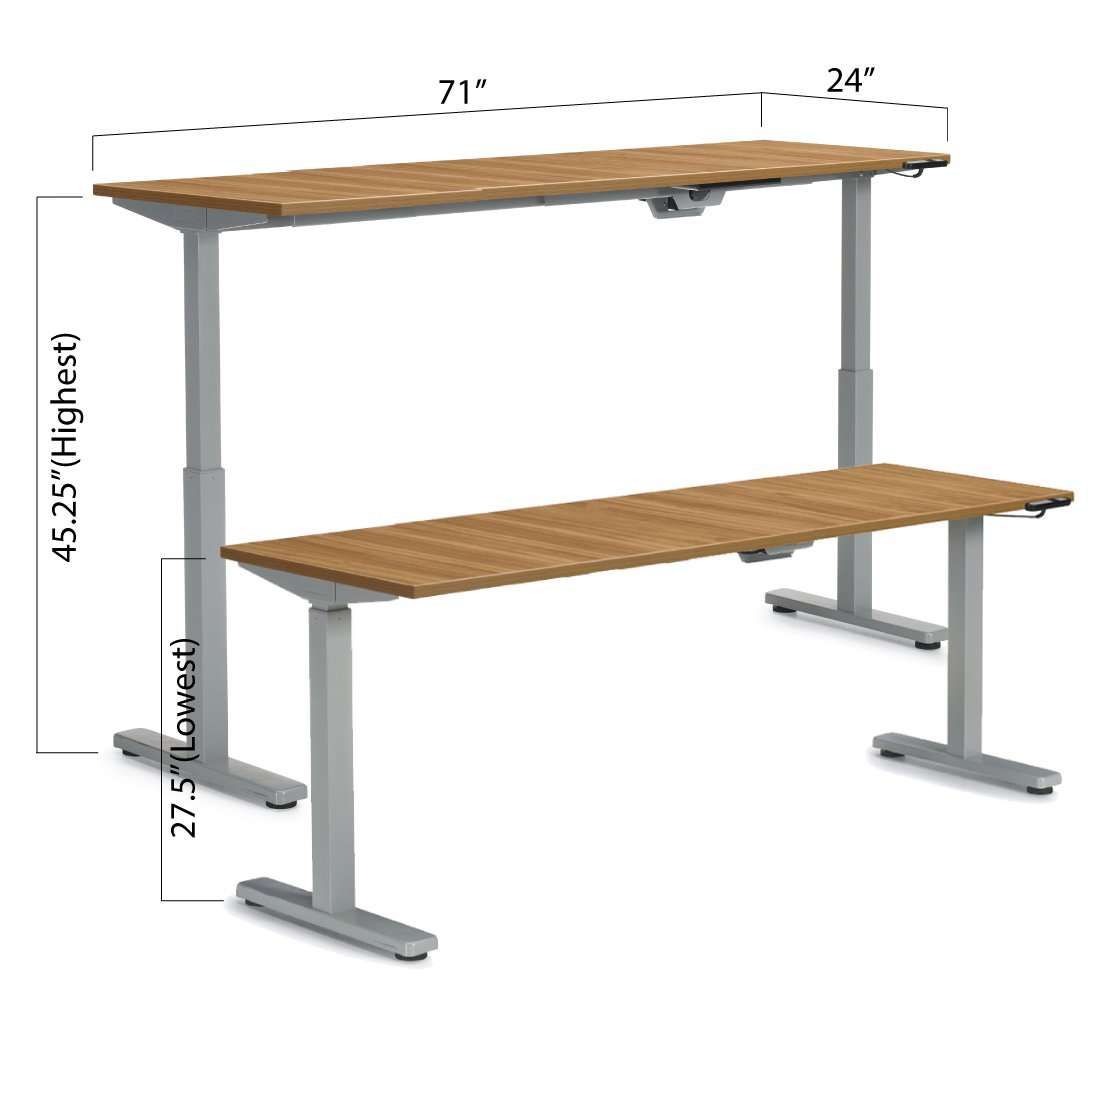 Height Adjustable Desk 71" x 24" - Kainosbuy.com